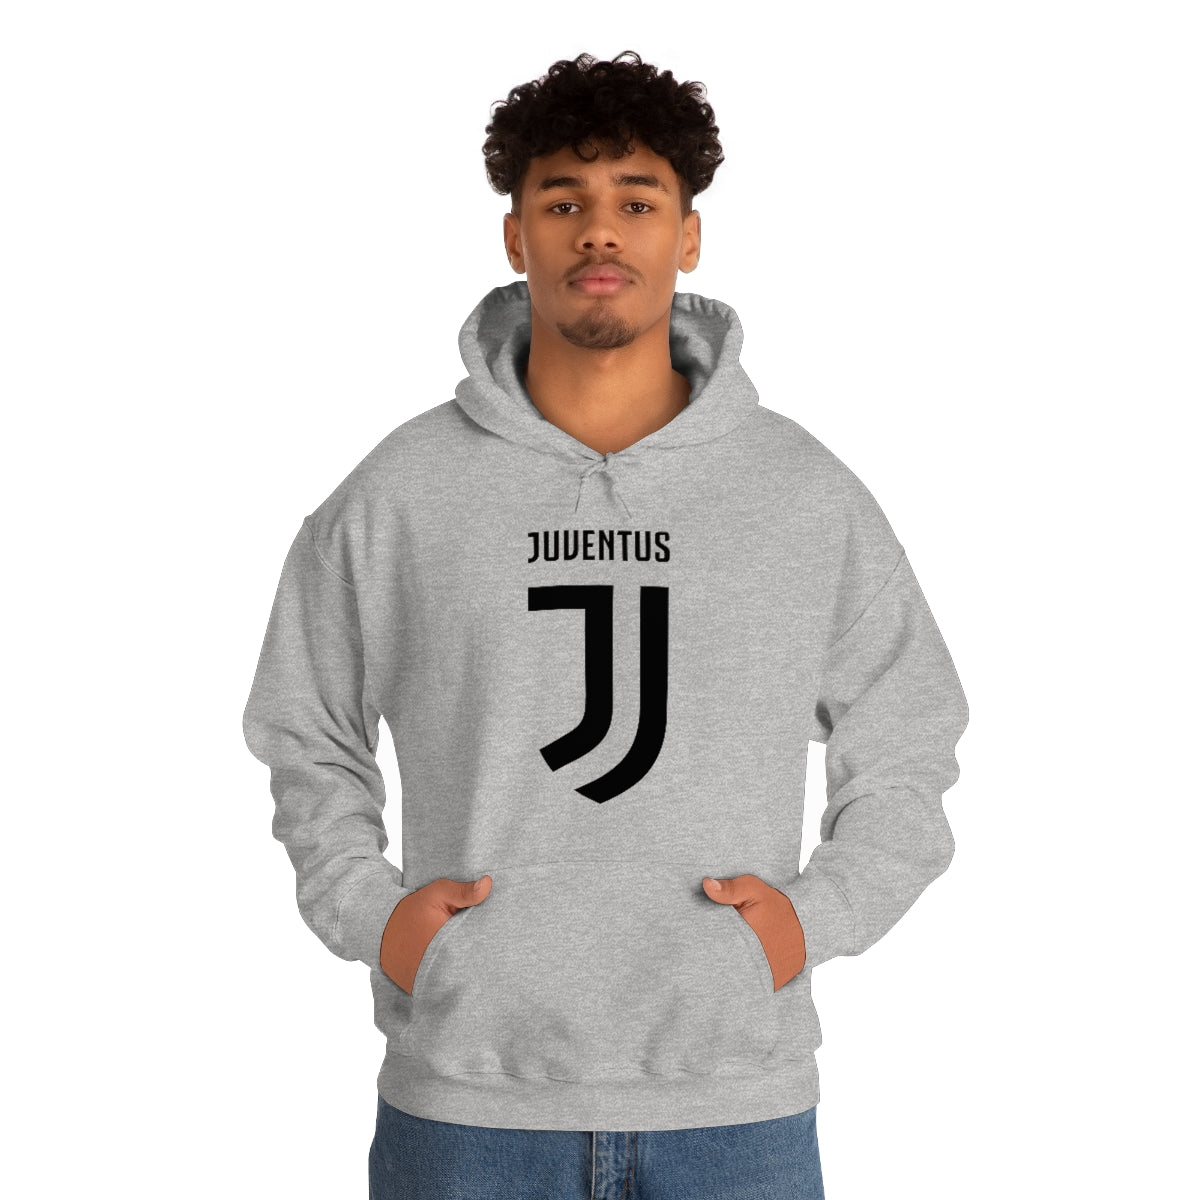 Juventus Unisex Hooded Sweatshirt